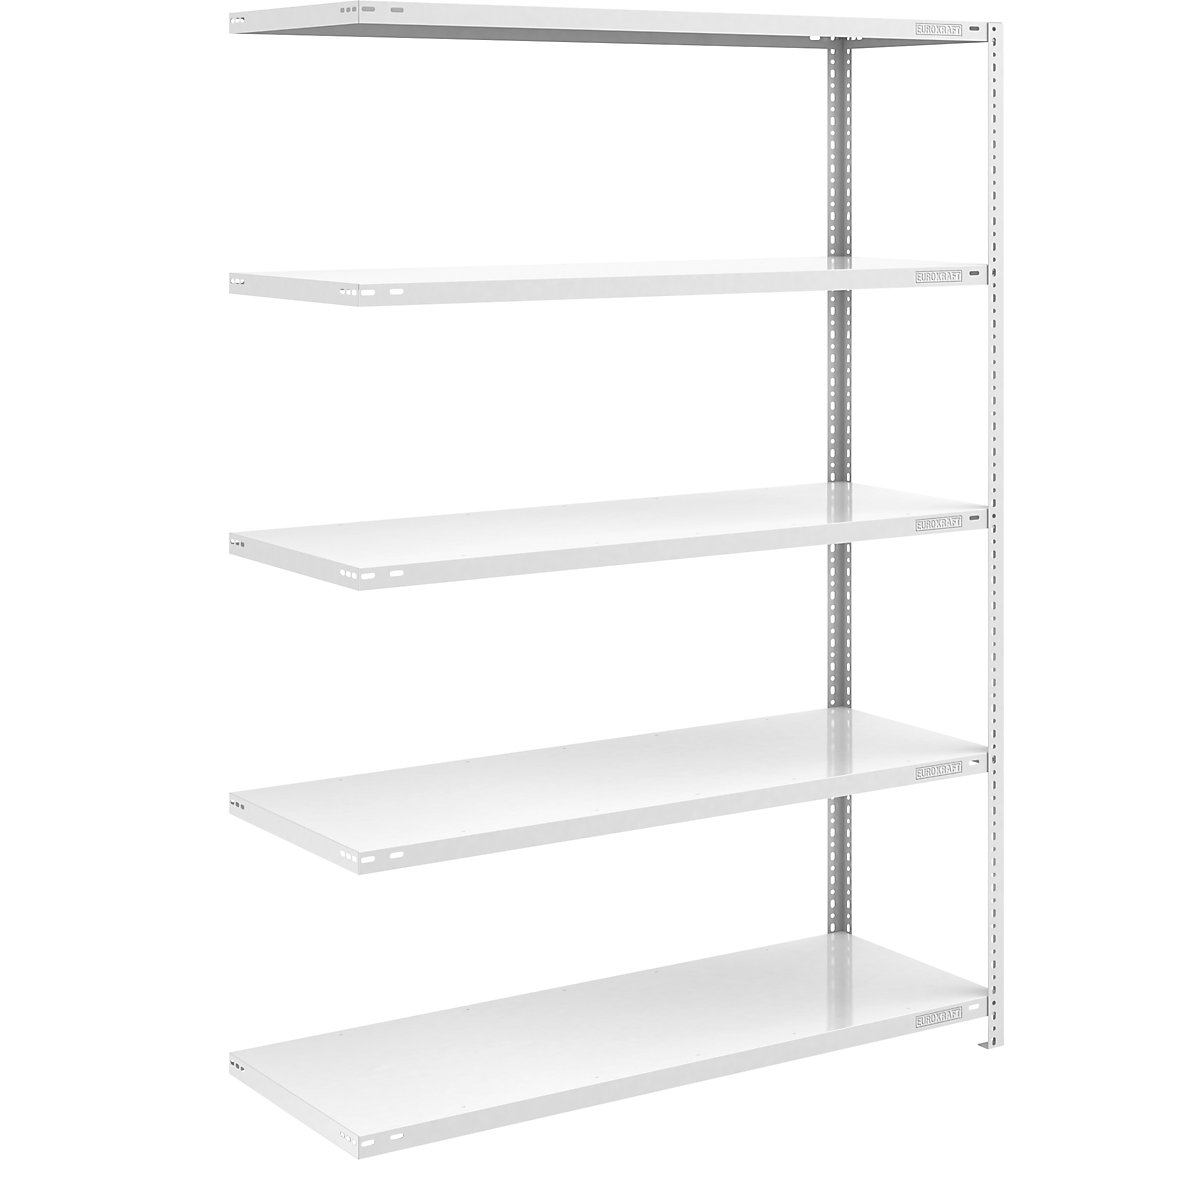 Bolt-together shelf unit, light duty, plastic coated – eurokraft pro, shelf unit height 2000 mm, shelf width 1300 mm, depth 600 mm, extension shelf unit-7